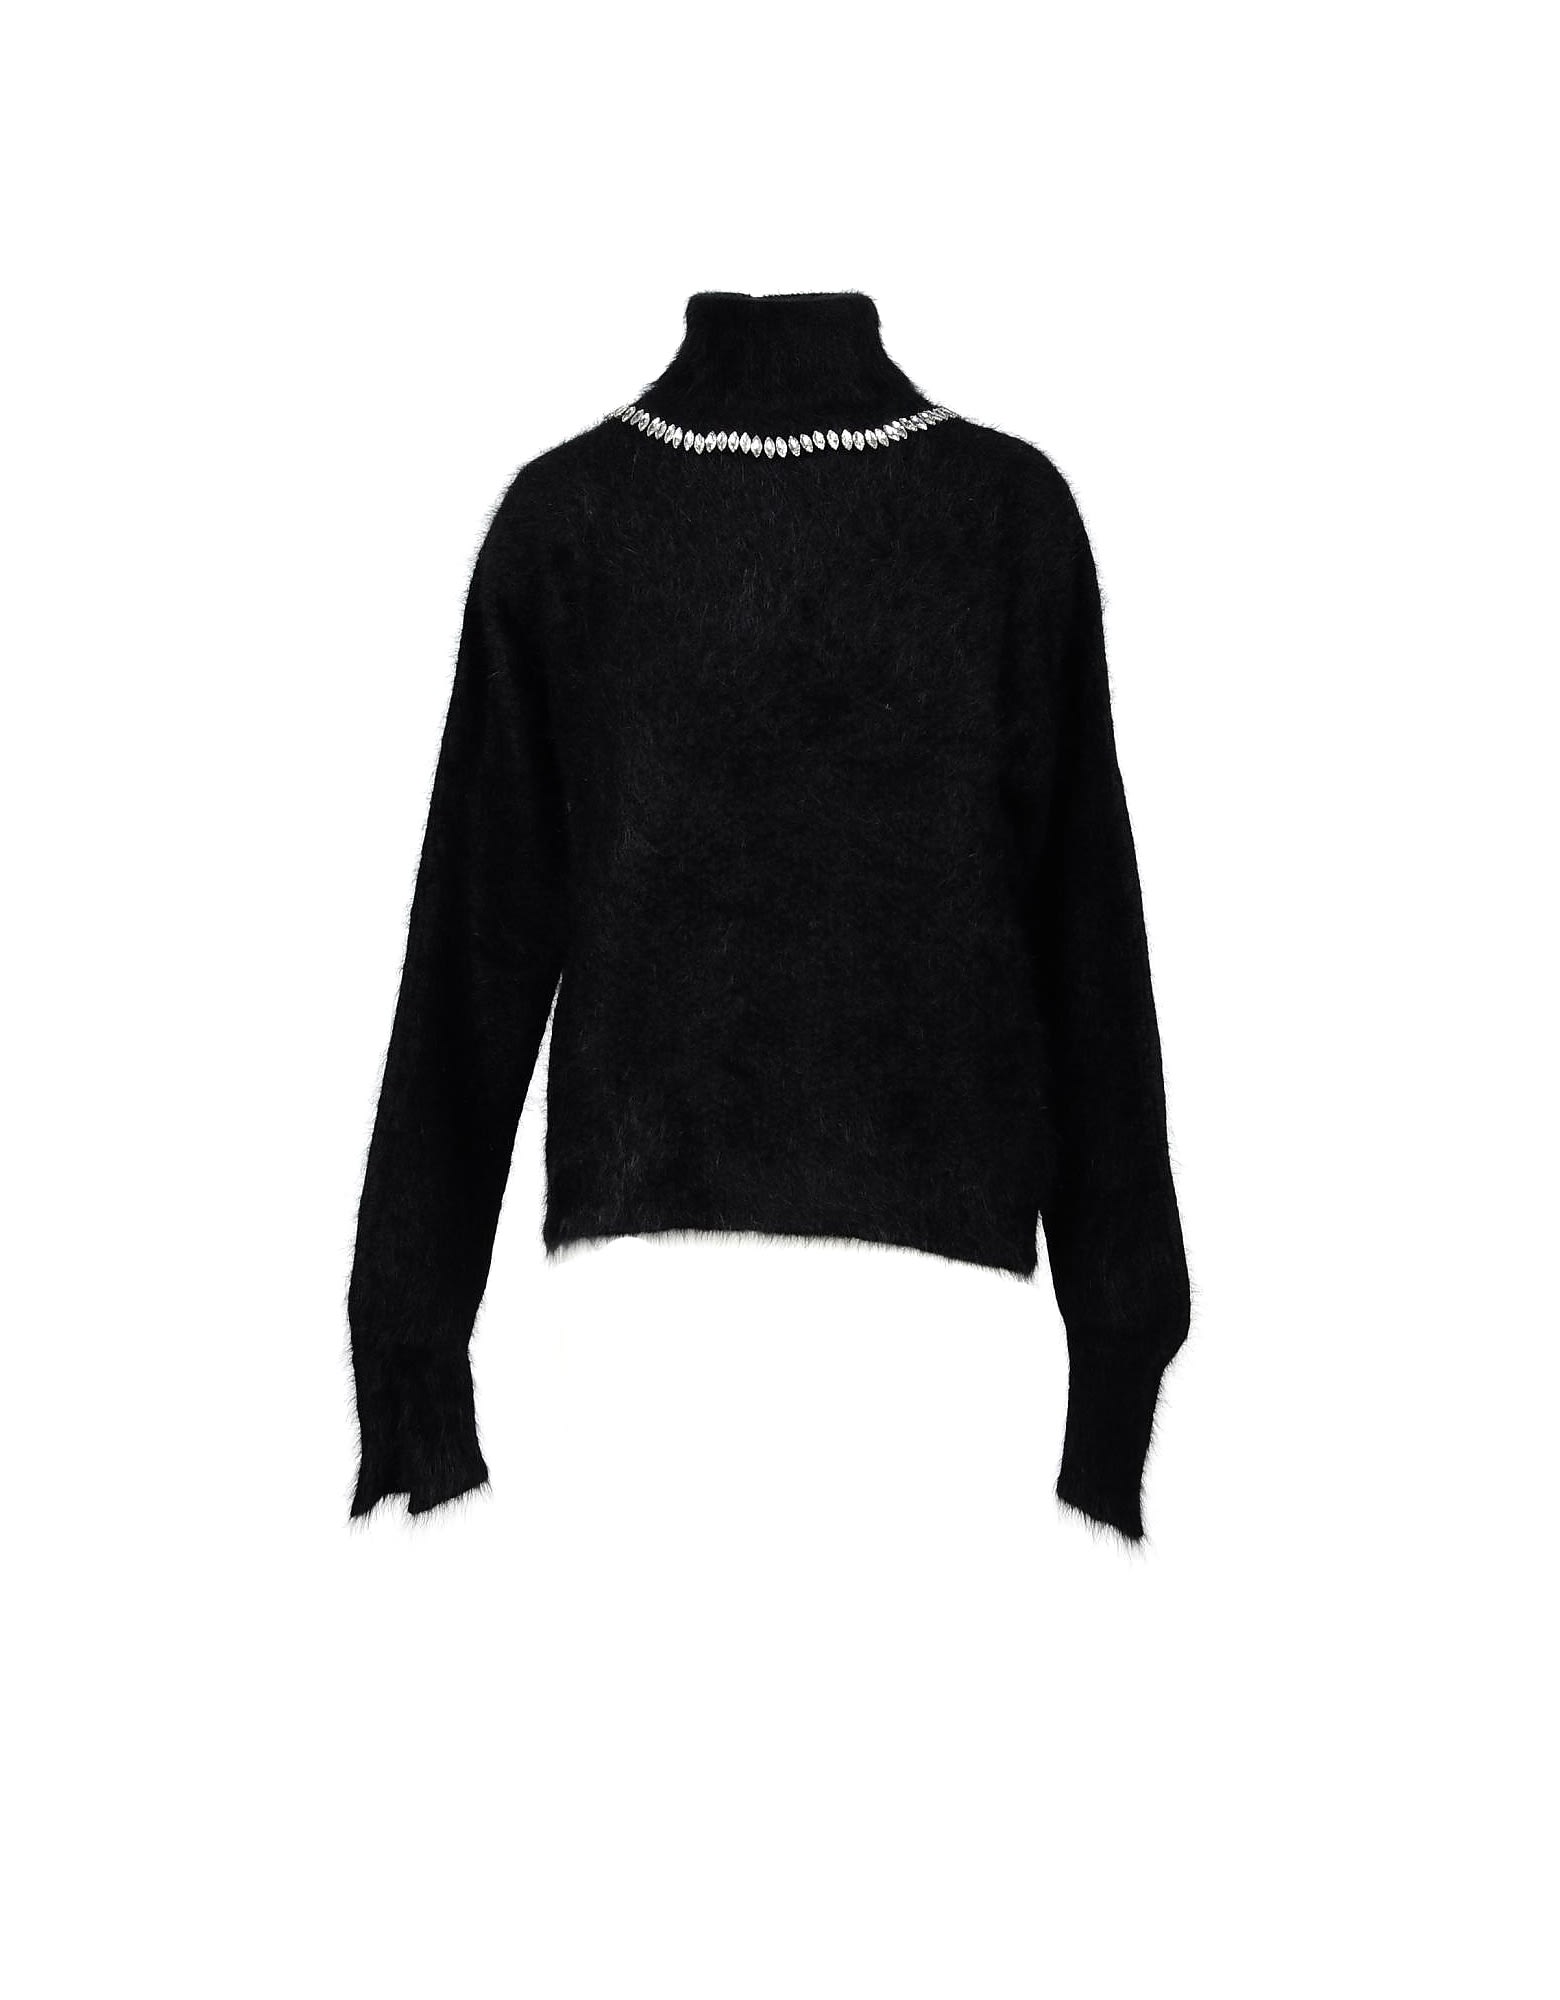 Marcobologna Black Angora Wool Womens Turtleneck Sweater